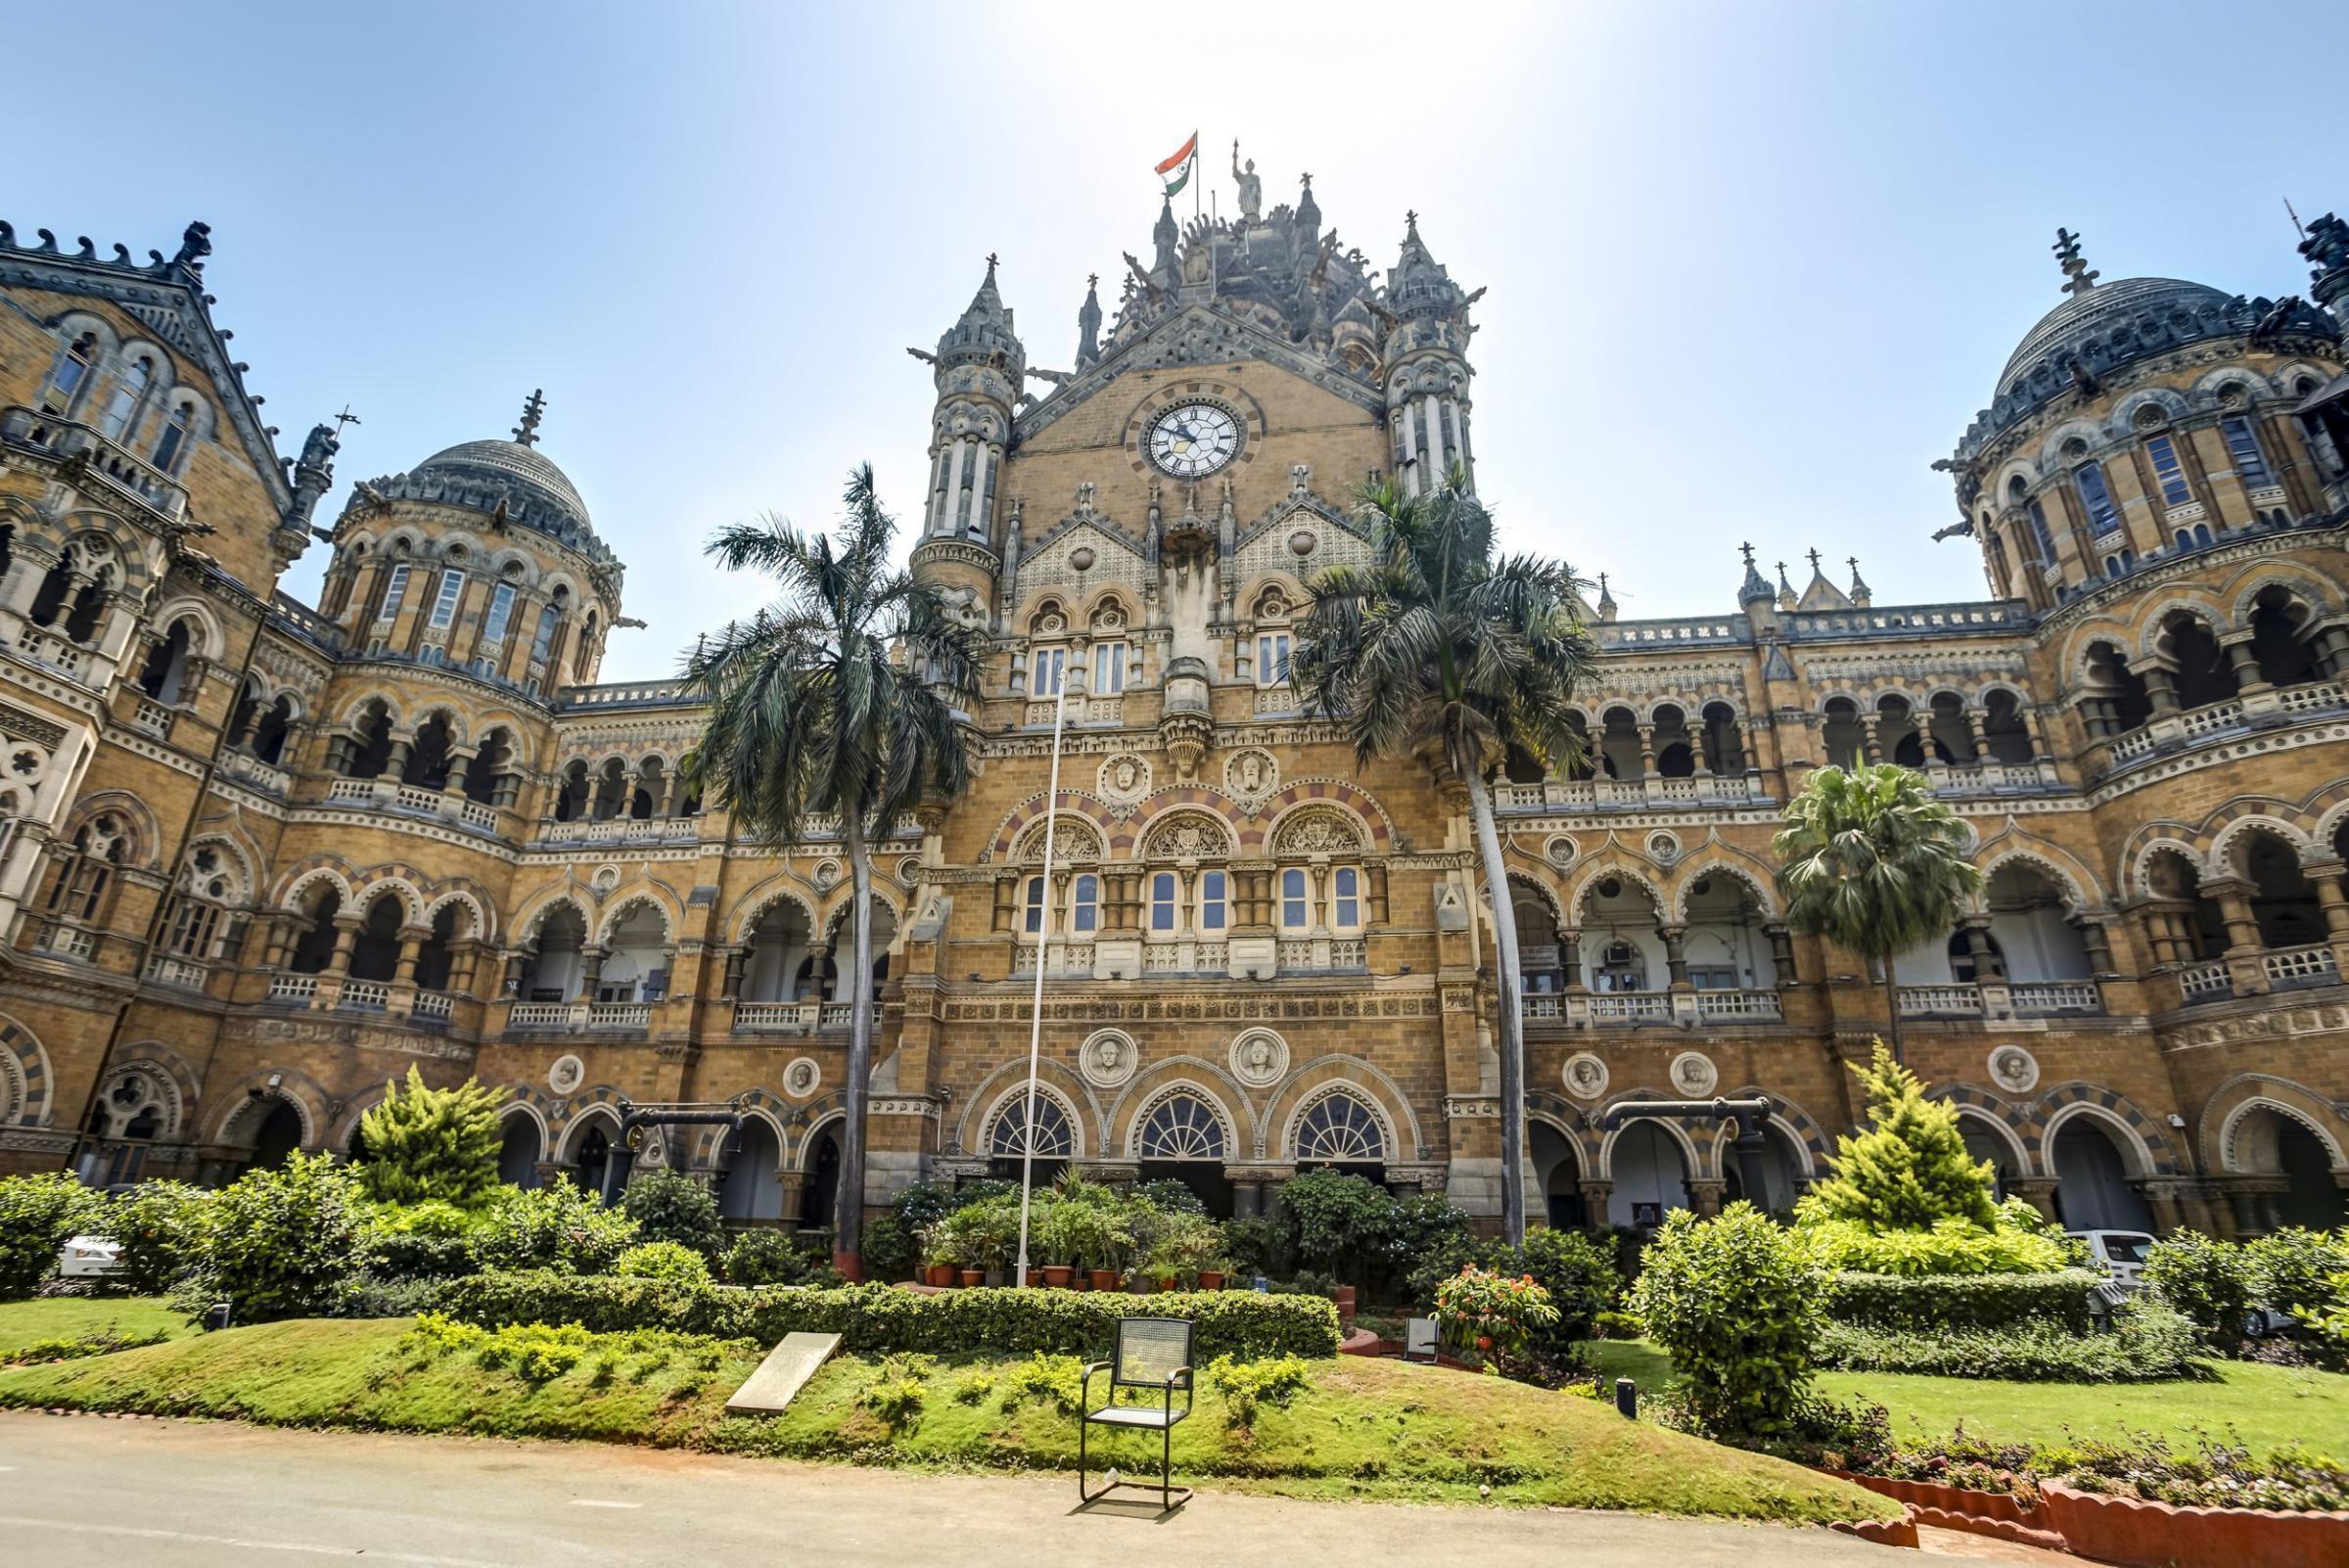 The Chhatrapati Shivaji Terminus (formerly Victoria Terminus) in Mumbai in India, which had friezes depicting the Stockton & Darlington Railway